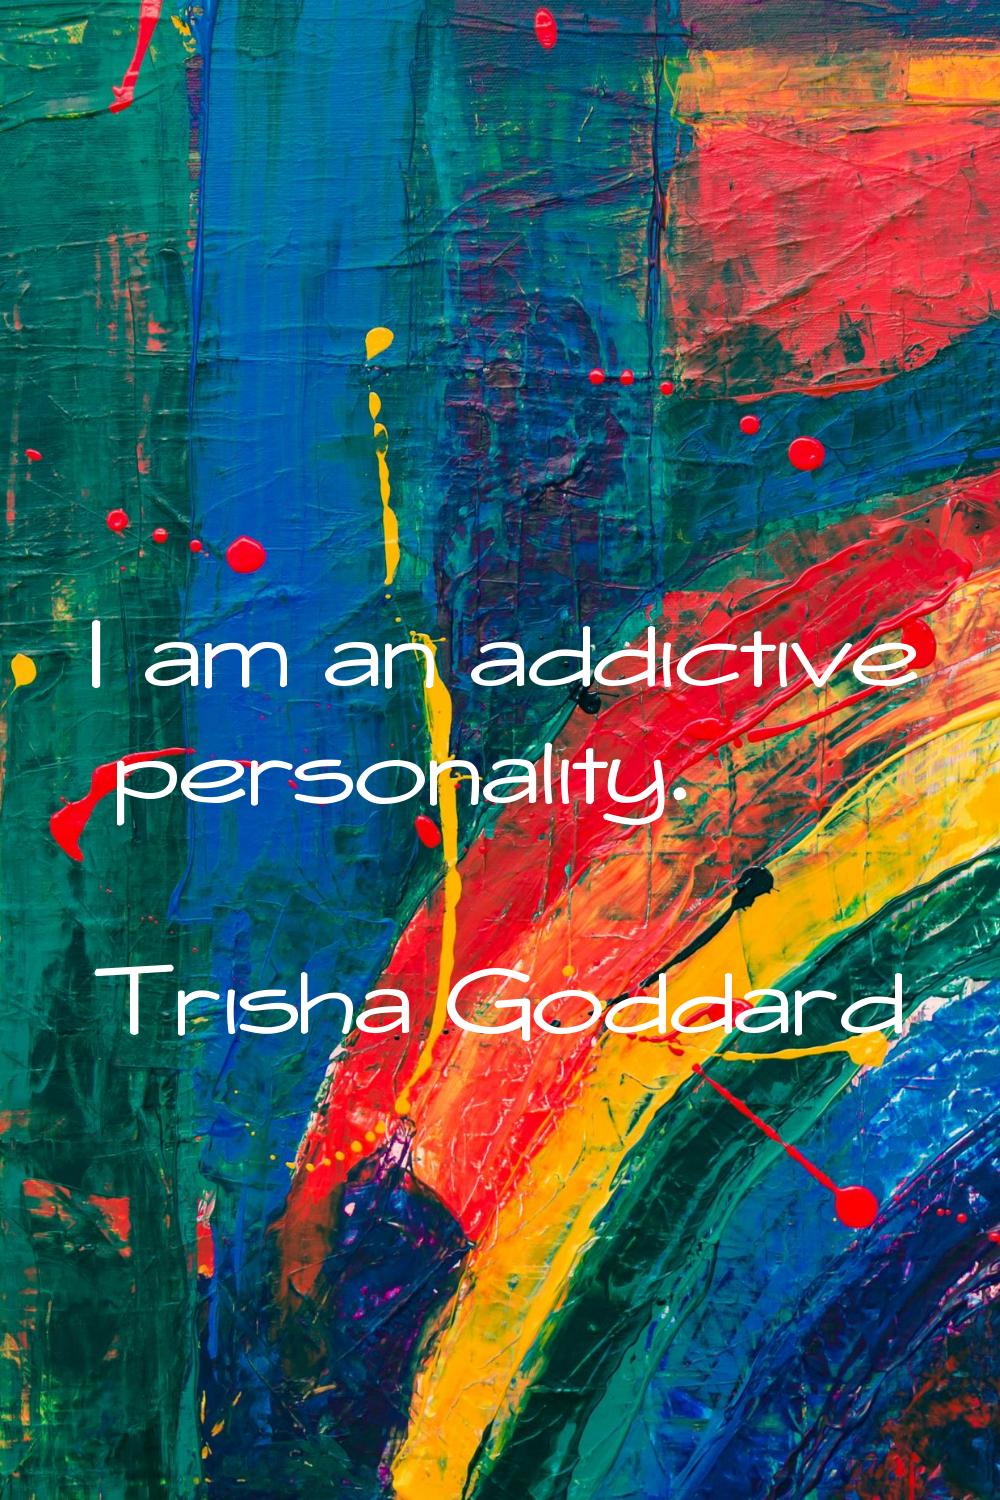 I am an addictive personality.